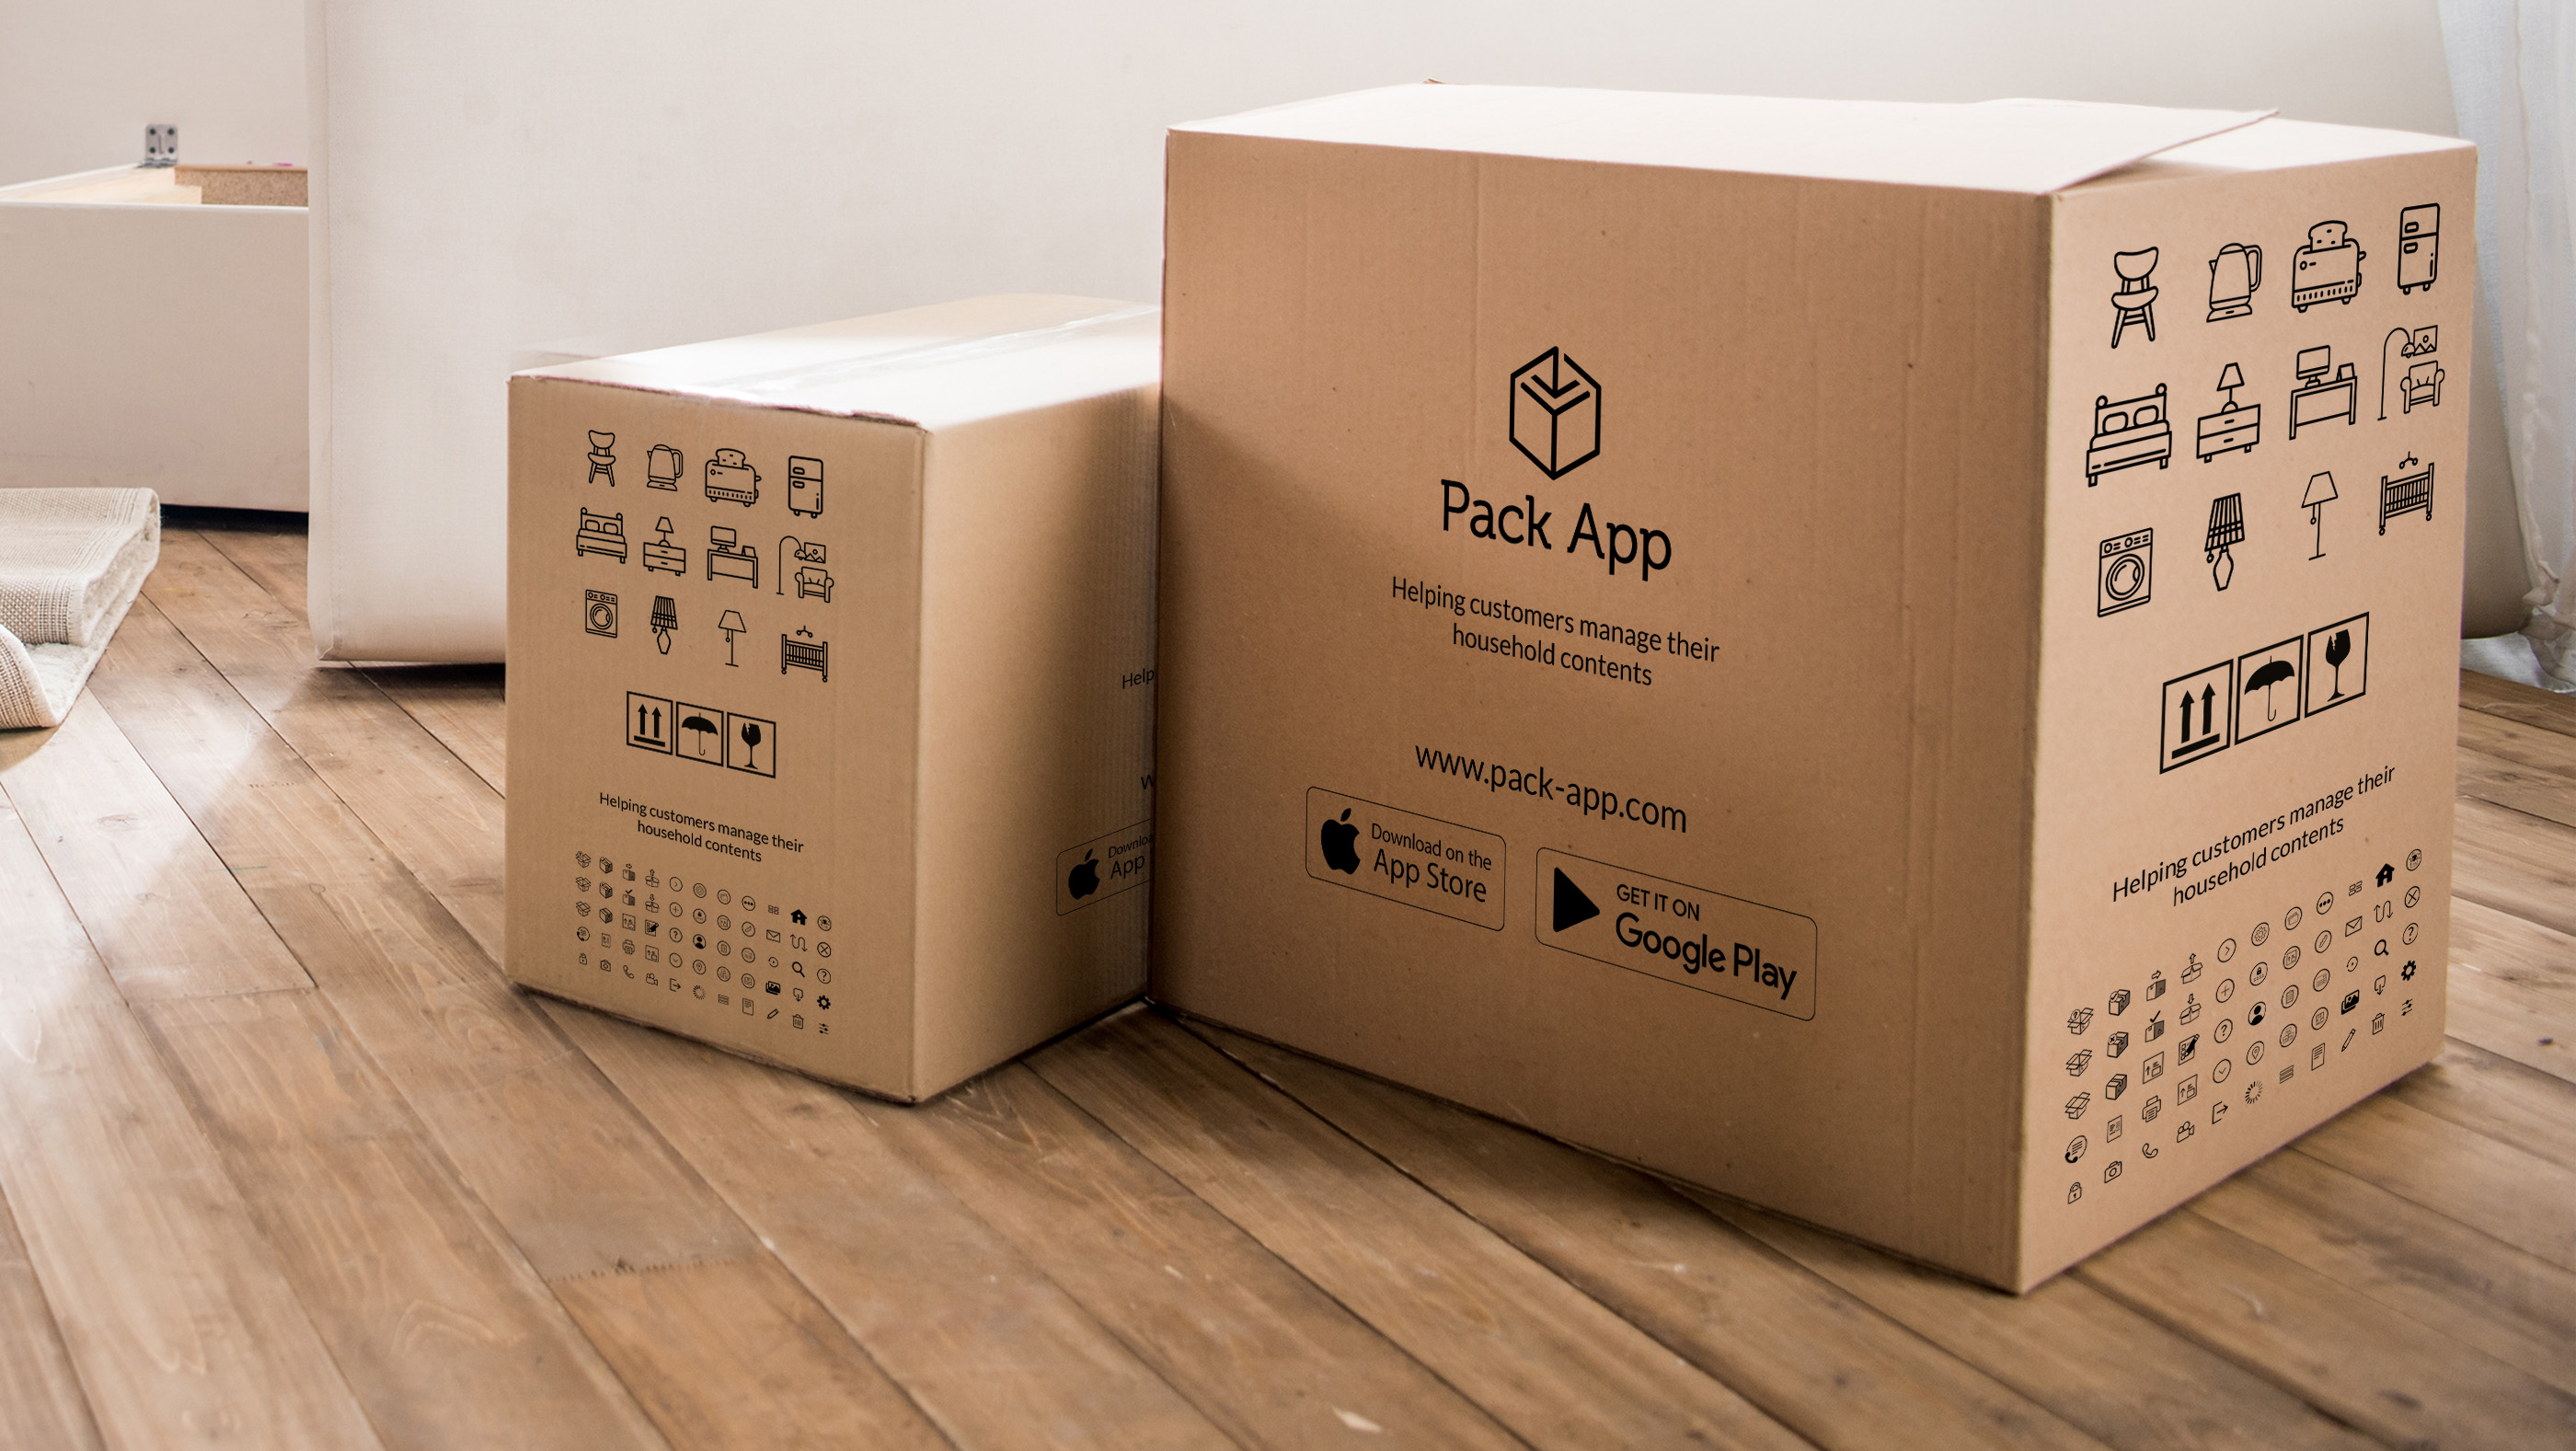 Pack App, mobile based application design and build